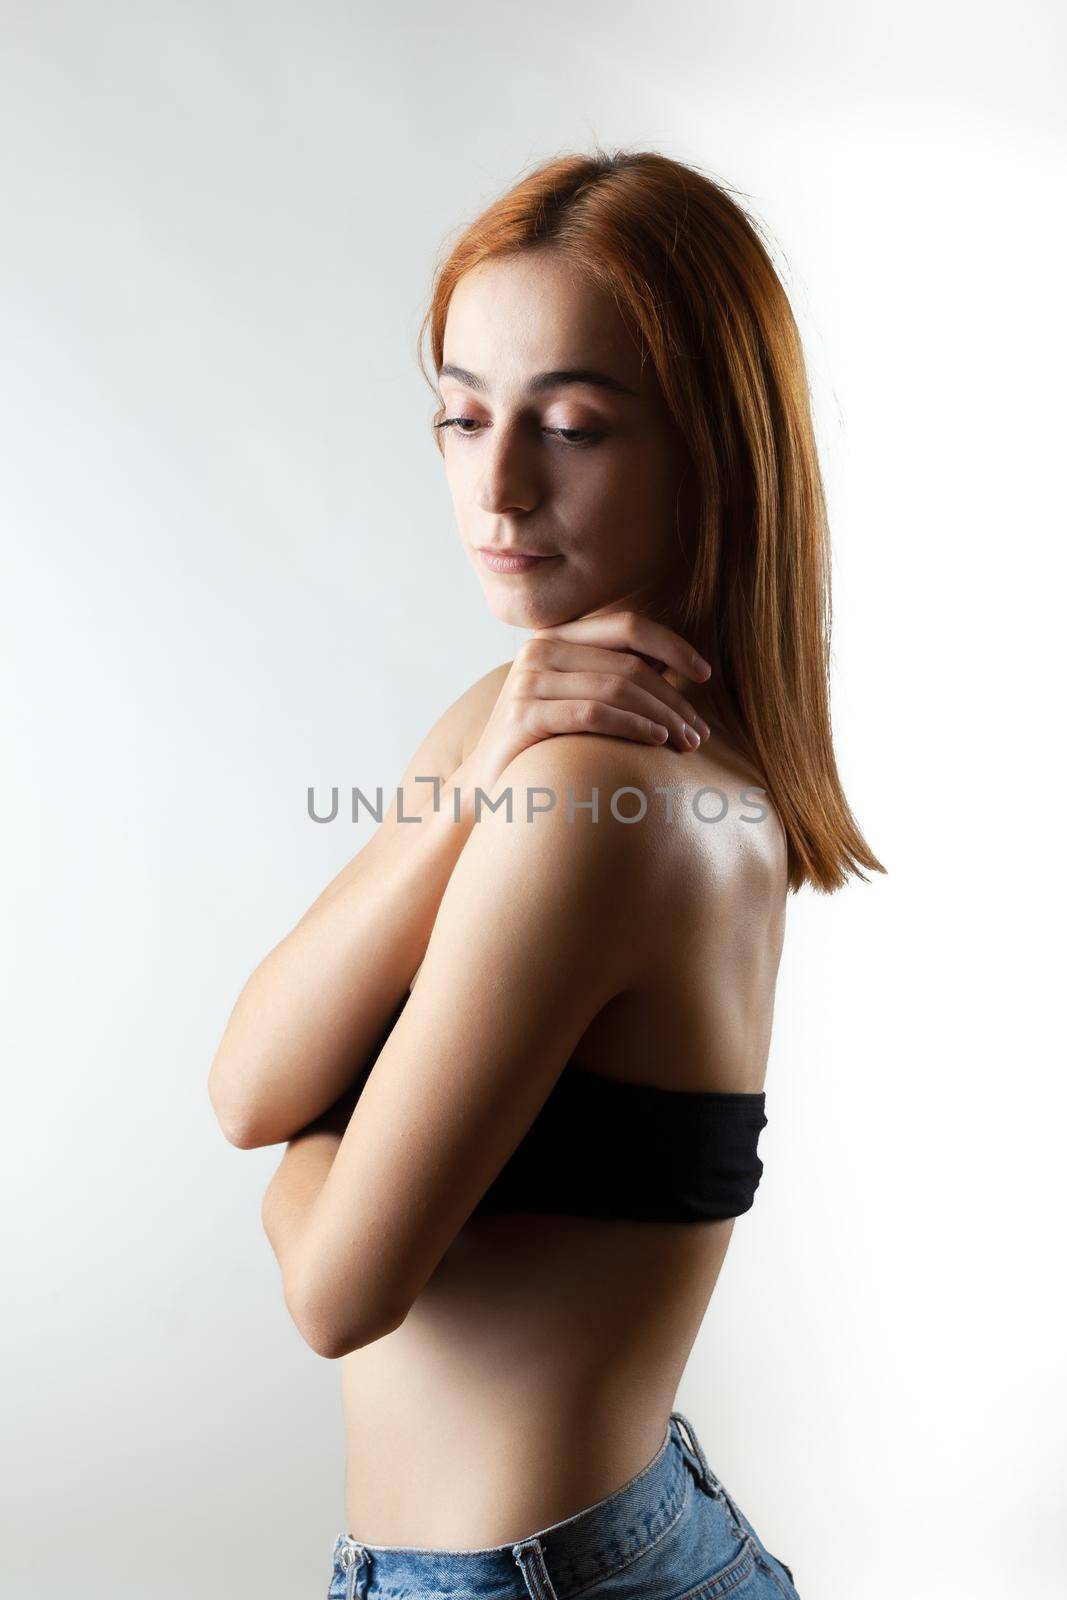 Beautiful girl with burnt orange hair posing in studio against gray background... by kokimk